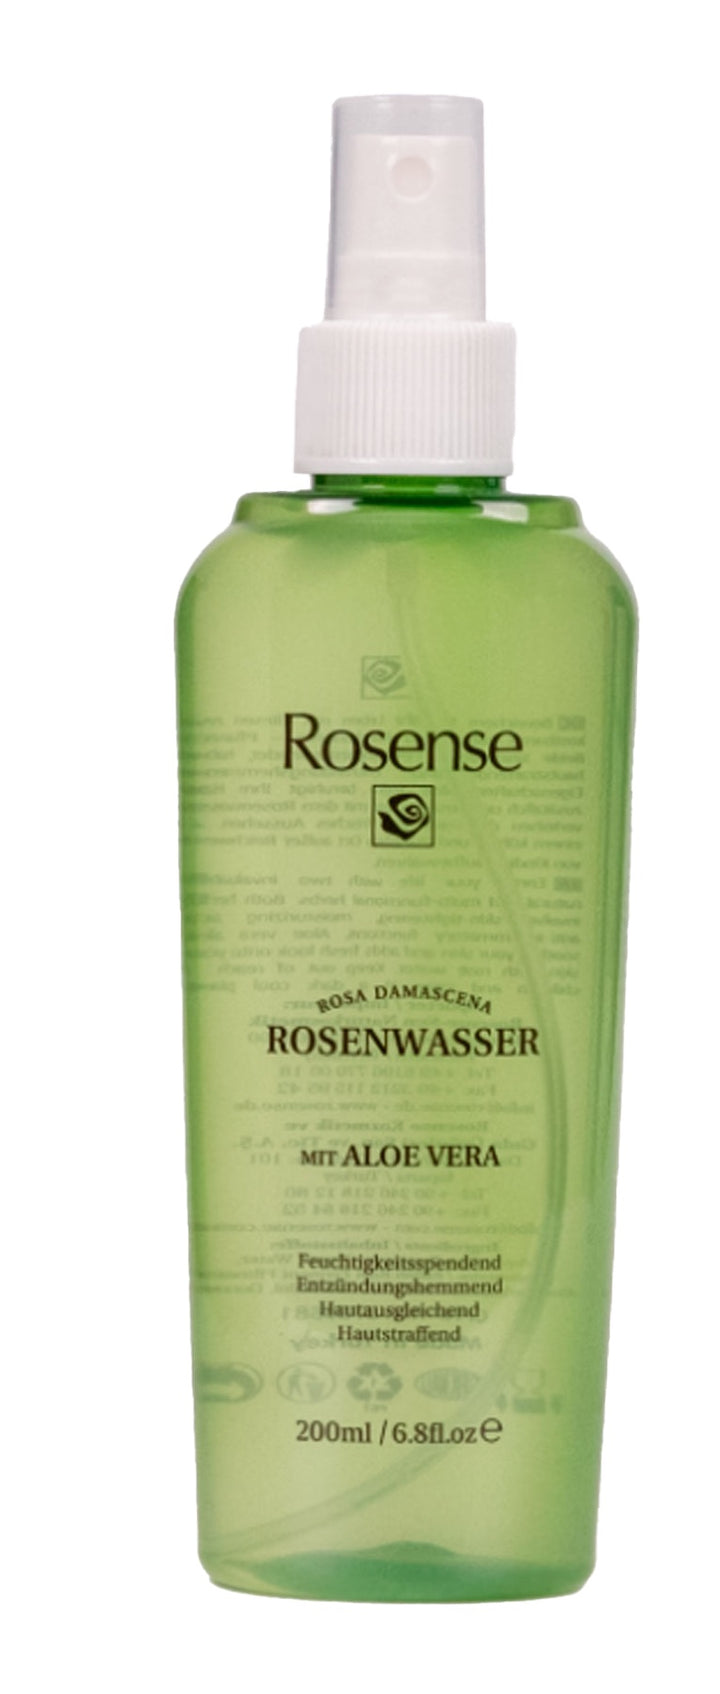 Rosense Rosewater with Aloe Vera Mist 200ml